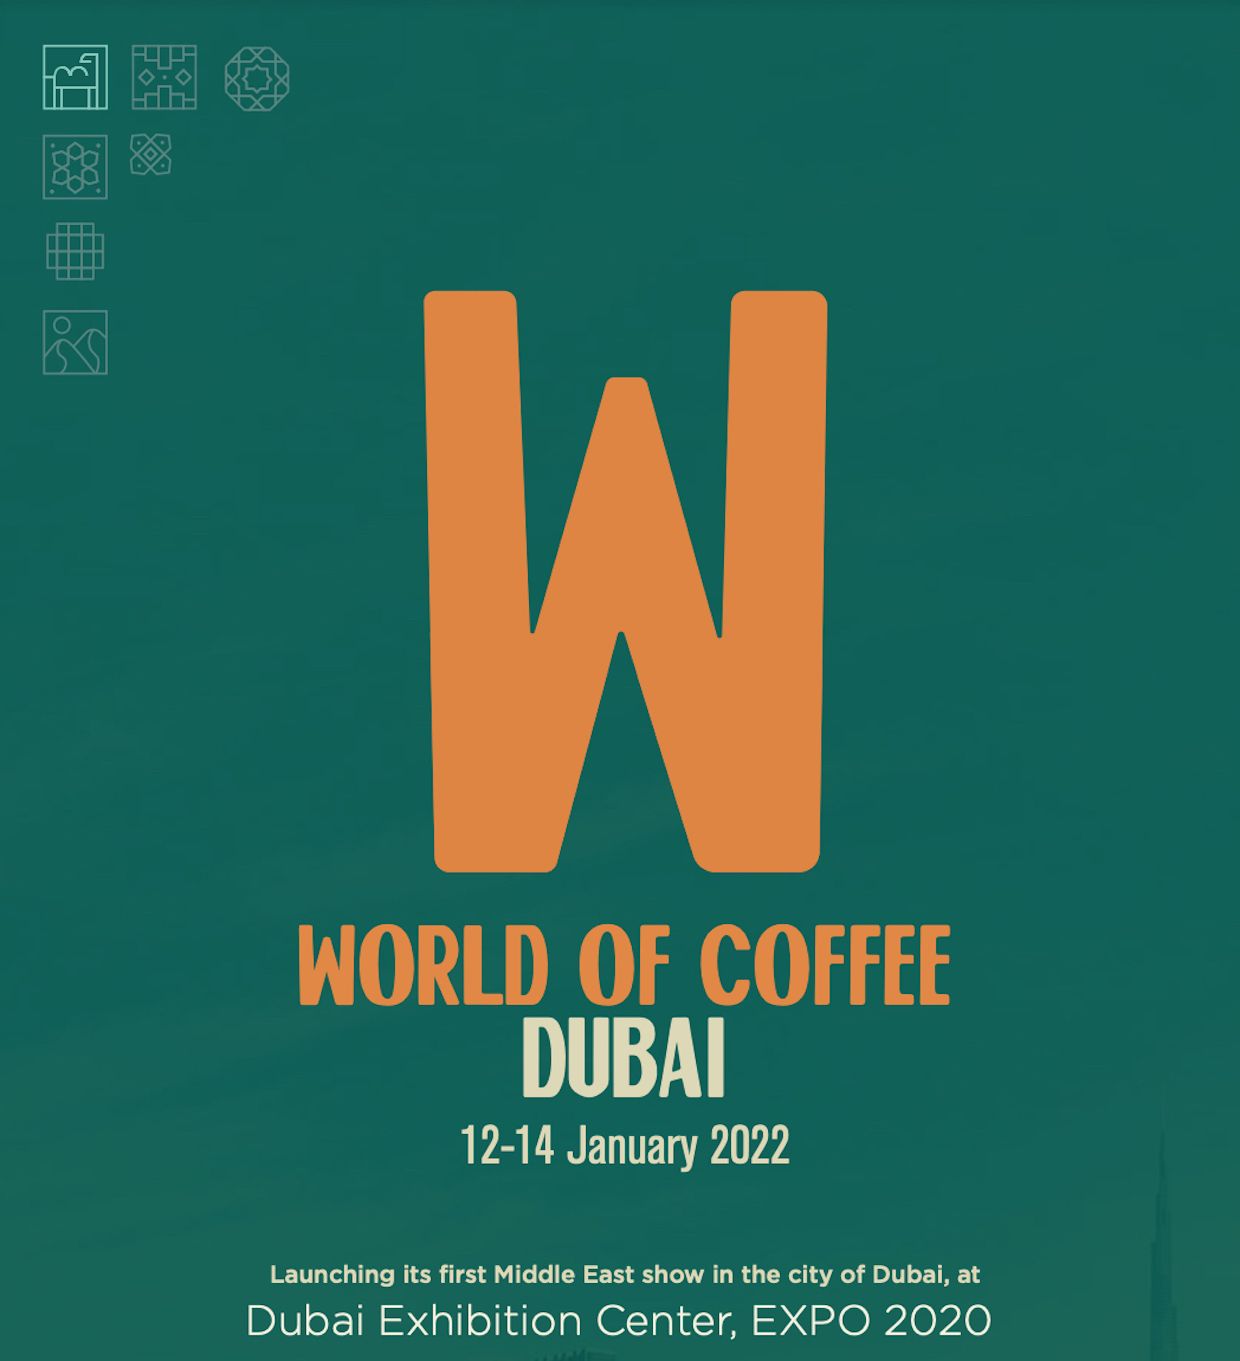 SCA Launching Inaugural World of Coffee Dubai Trade Show in January